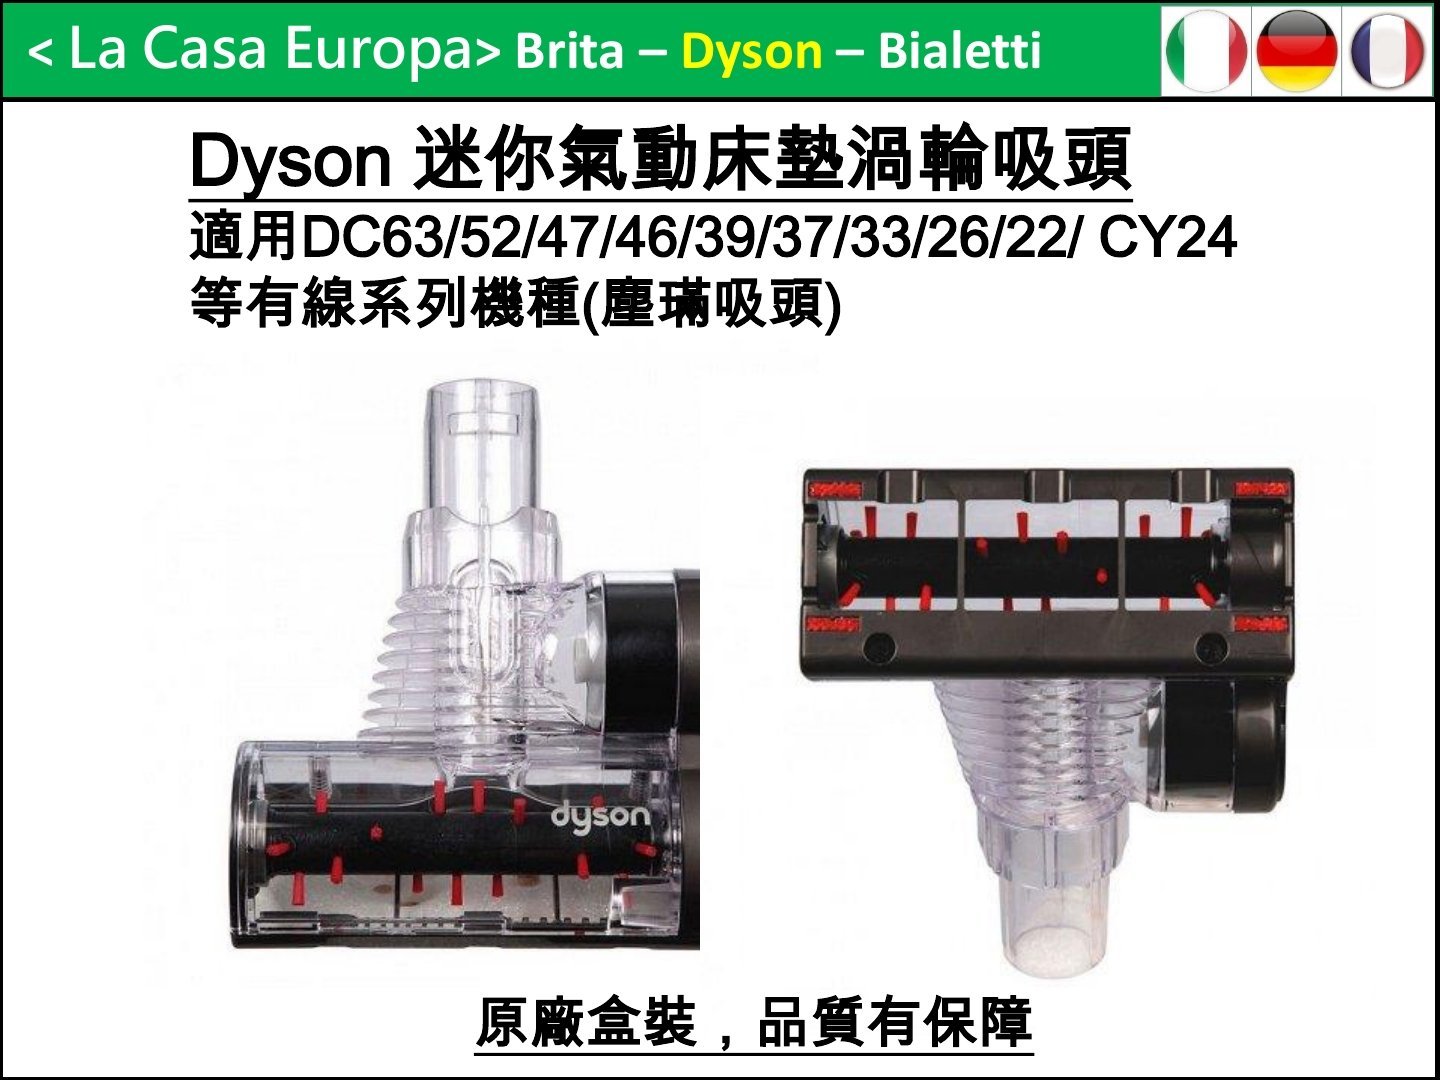 My Dyson] DC63 DC52迷你氣動渦輪吸頭。可用來吸床墊，刷毛拍打。DC47 